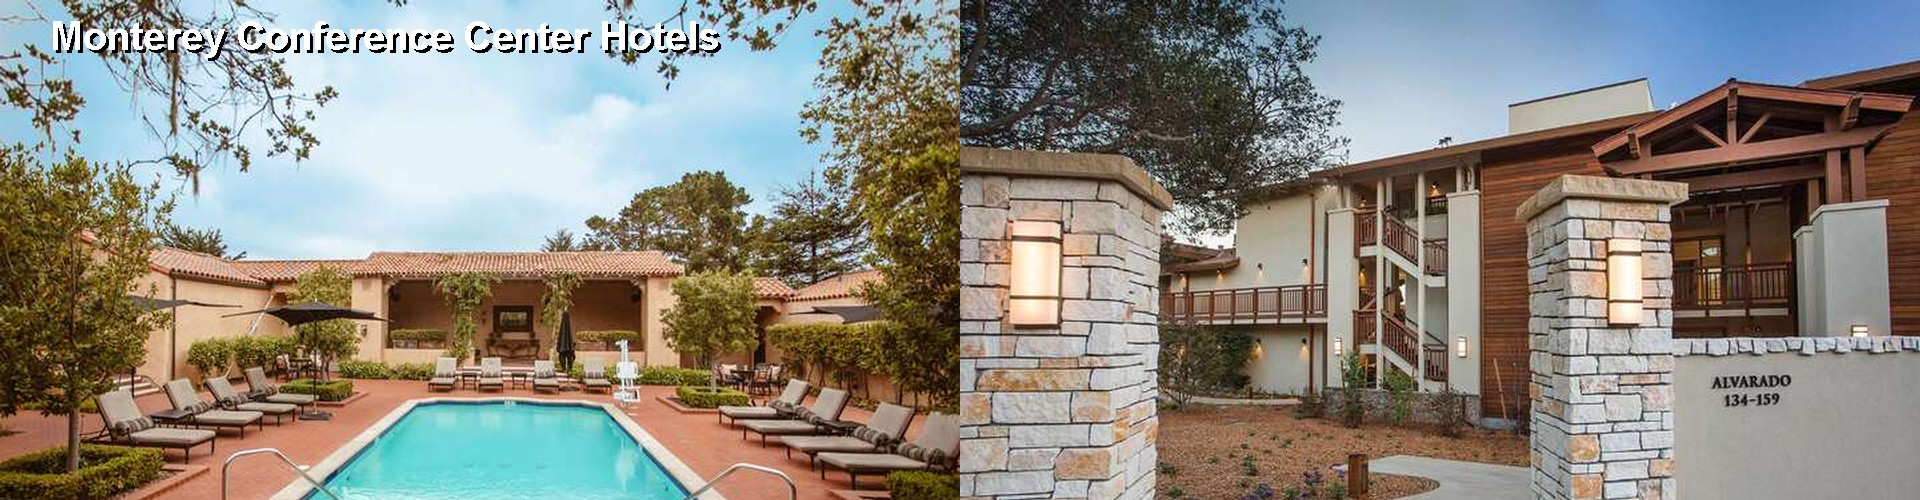 5 Best Hotels near Monterey Conference Center